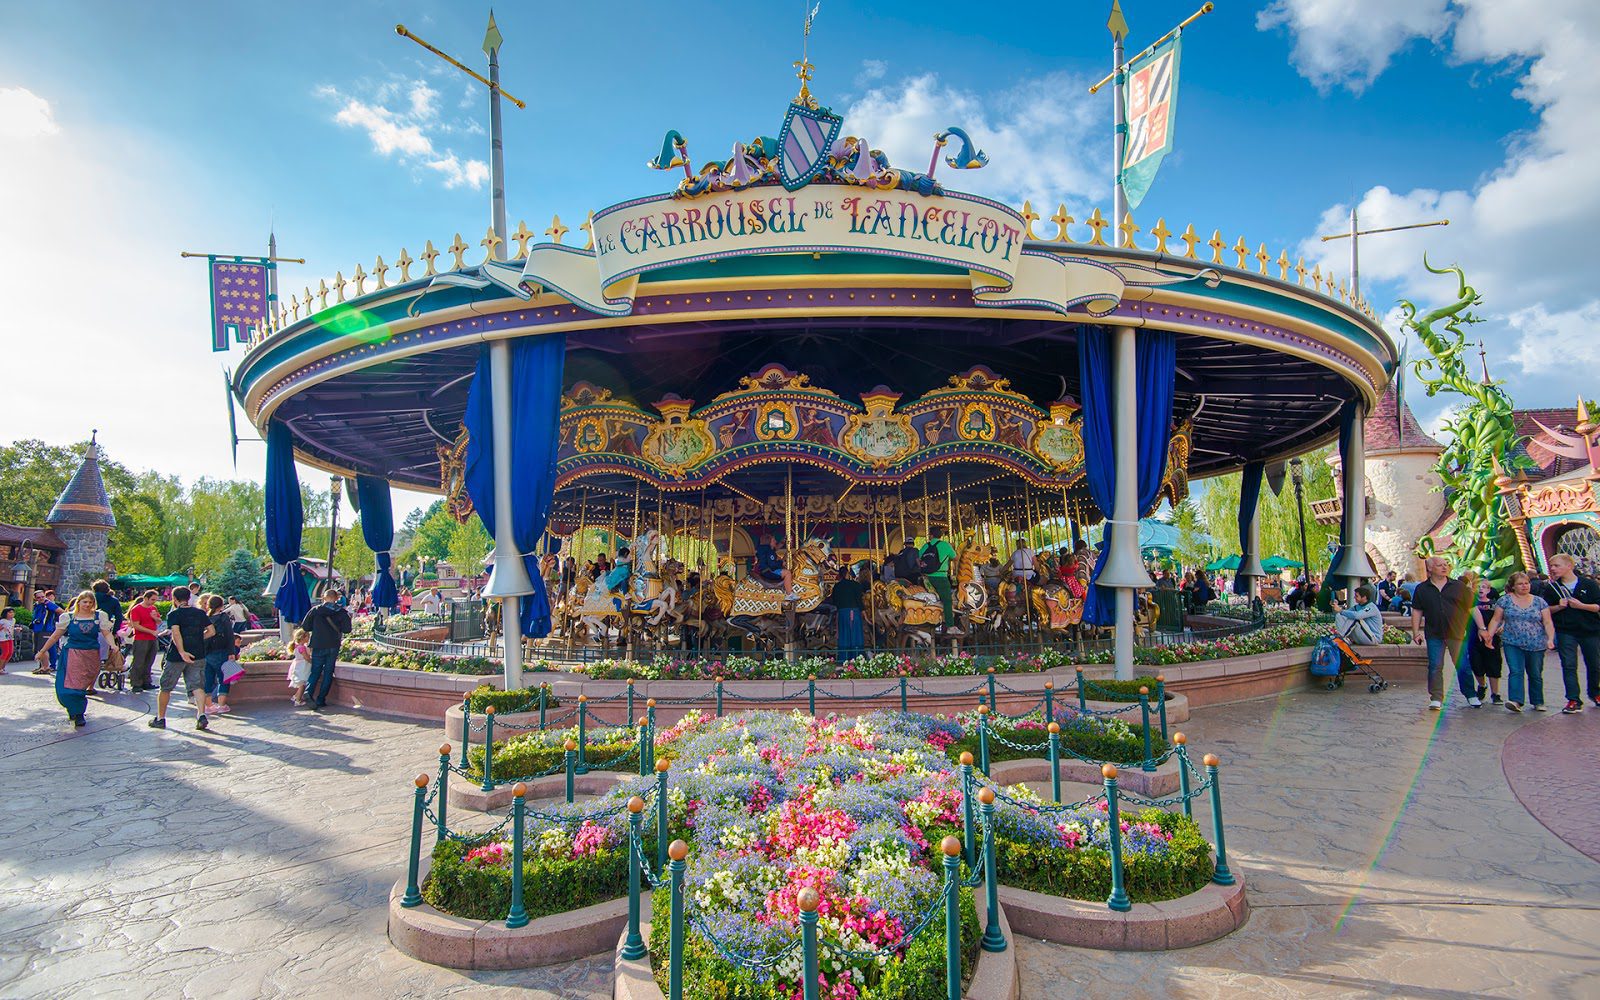 Lancelot's Carousel